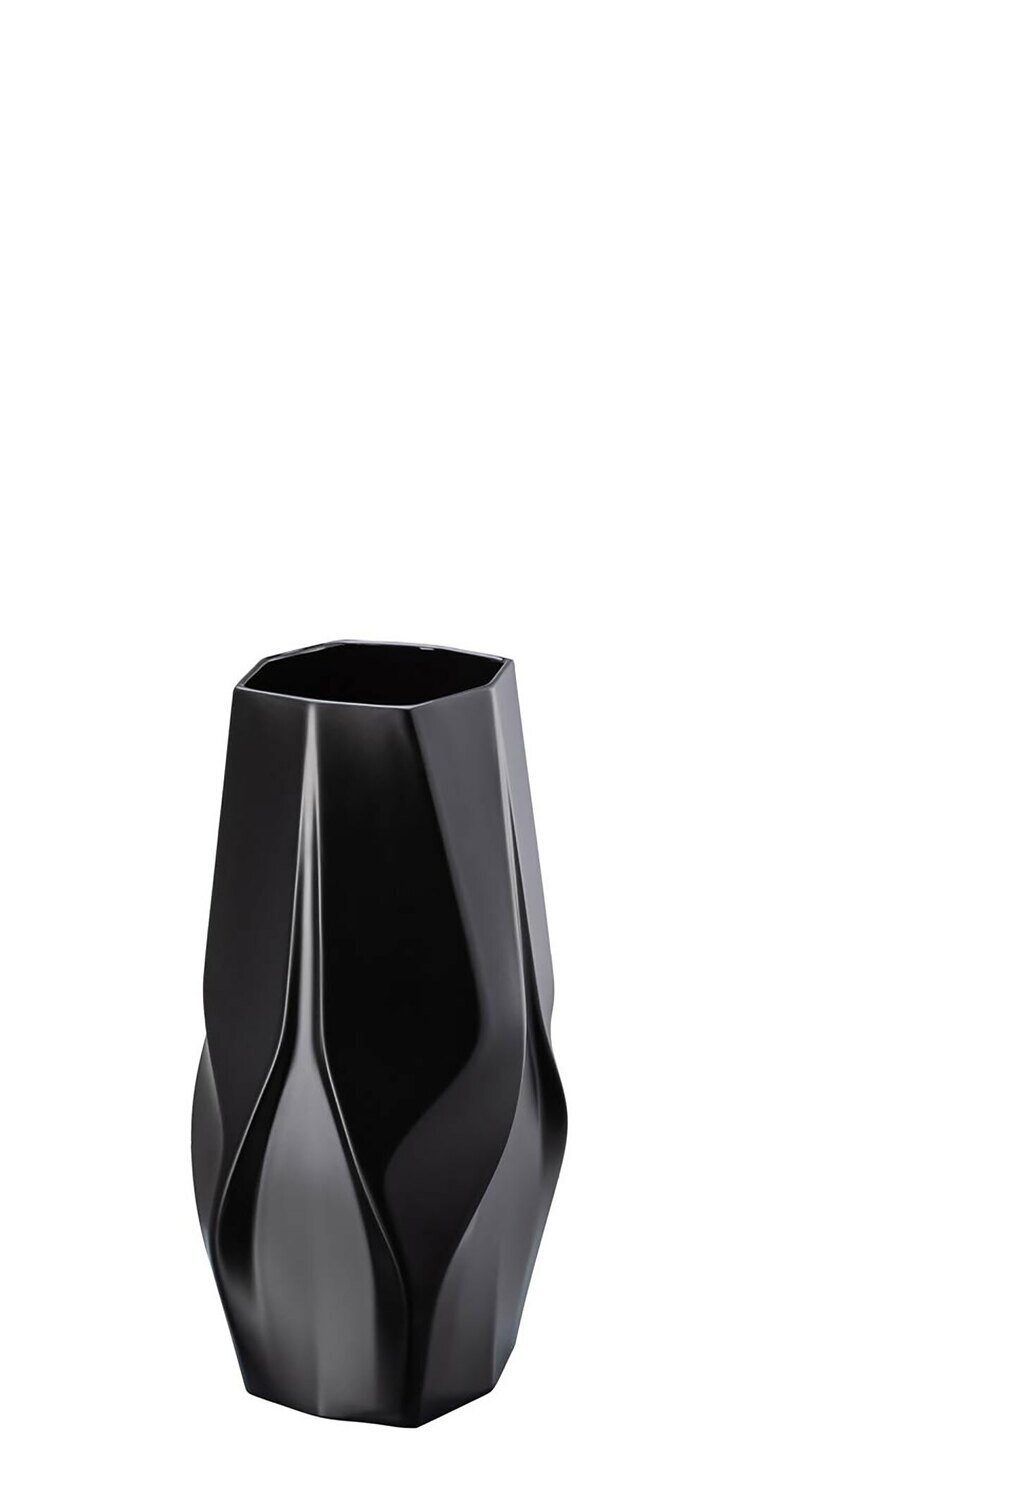 Rosenthal Weave Black - Zaha Hadid Vase 13 3/4 Inchch